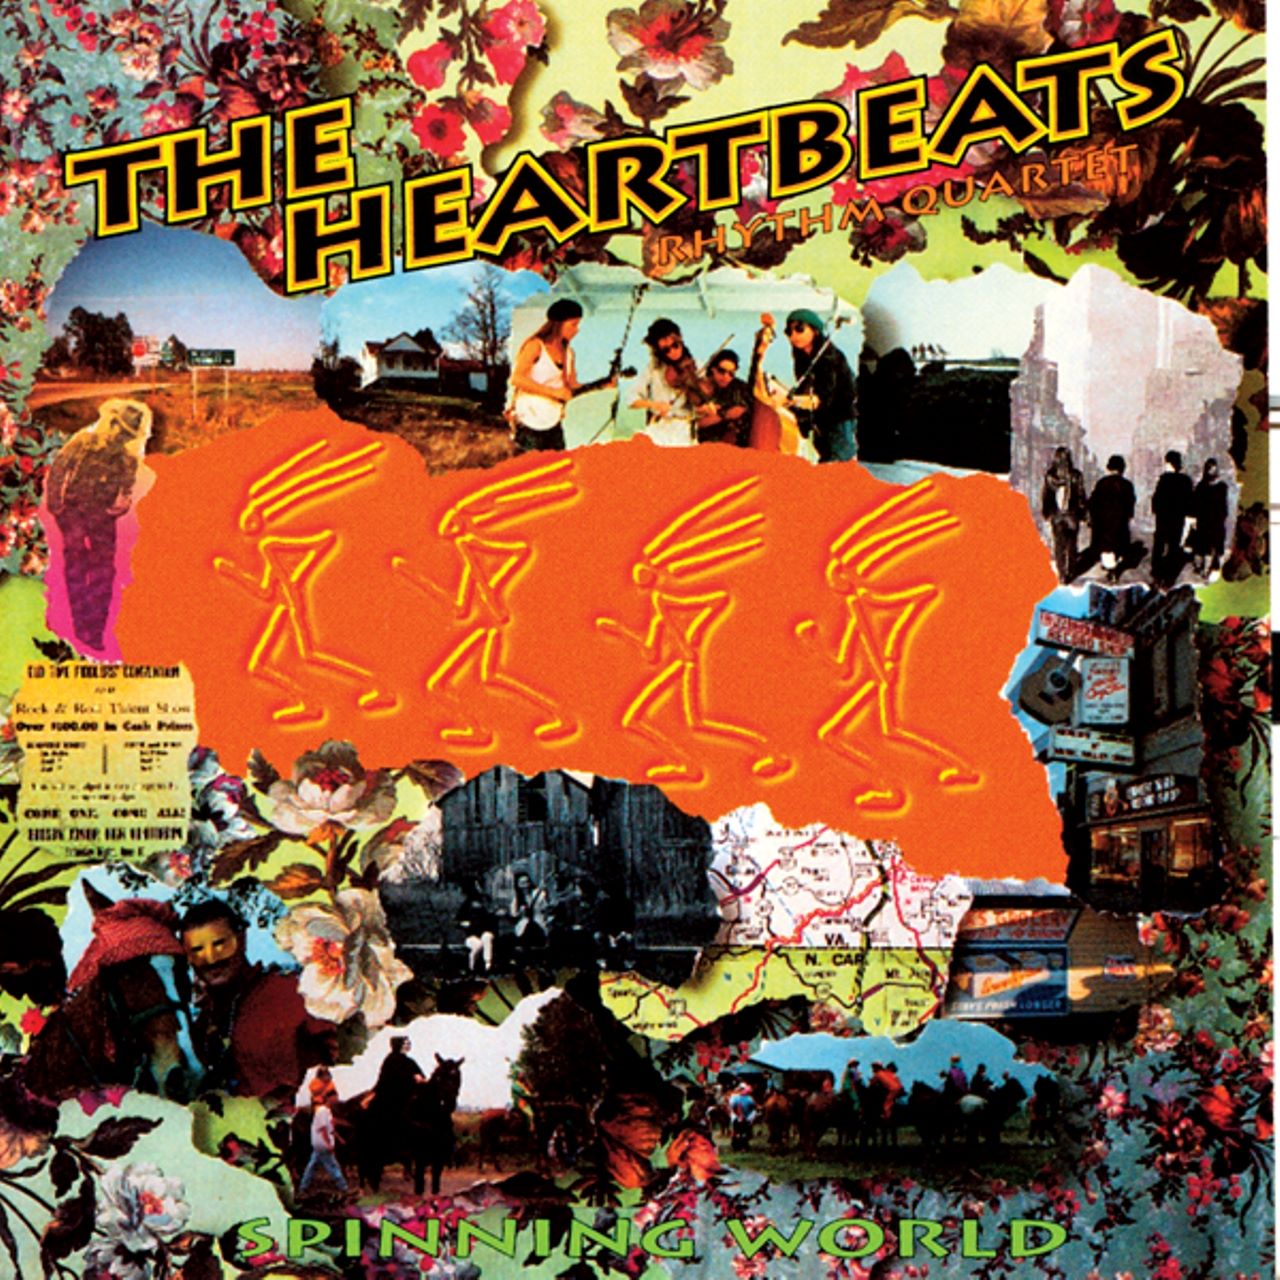 Heartbeats Rhythm Quartet - Spinning World cover album